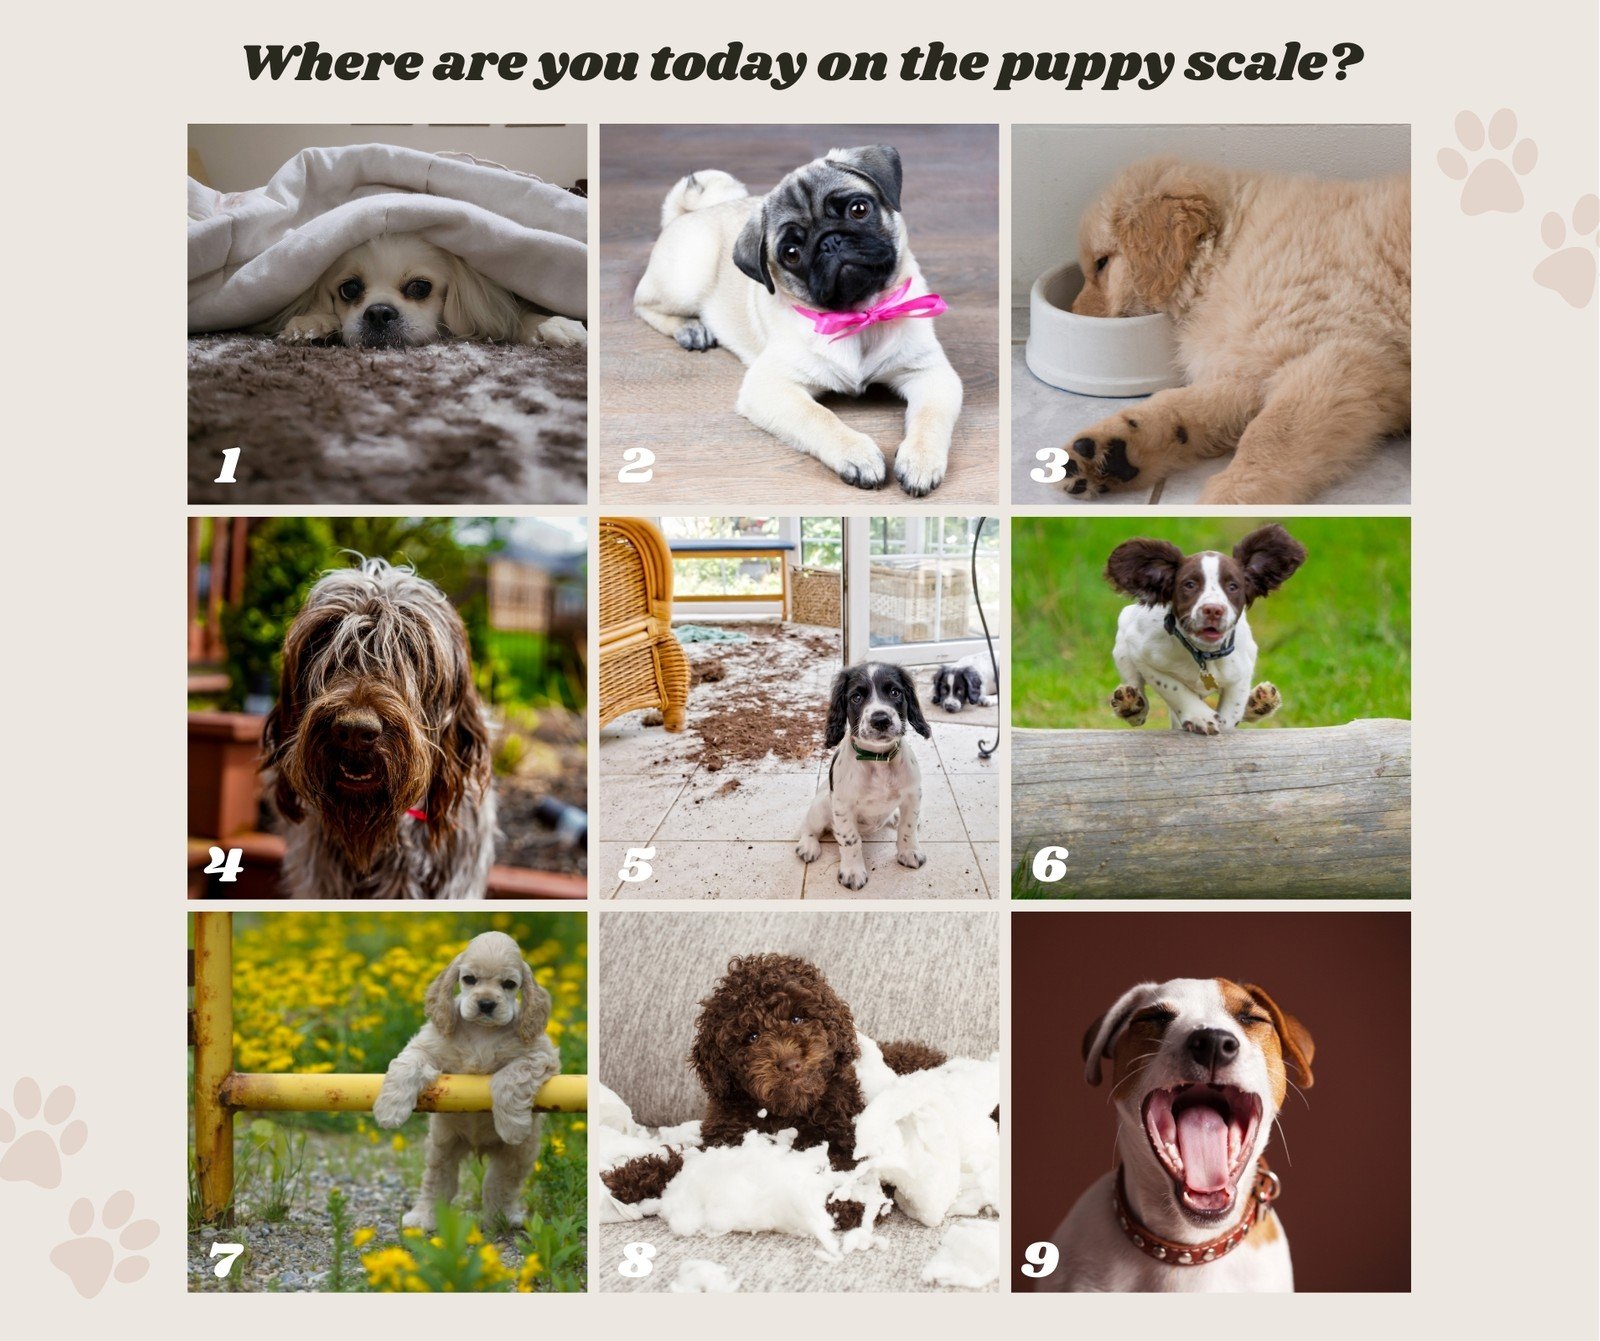 https://marketplace.canva.com/EAEhOlDtt1w/1/0/1600w/canva-cute-playful-photo-grid-puppy-scale-quiz-facebook-post-kVJJK02DKnM.jpg